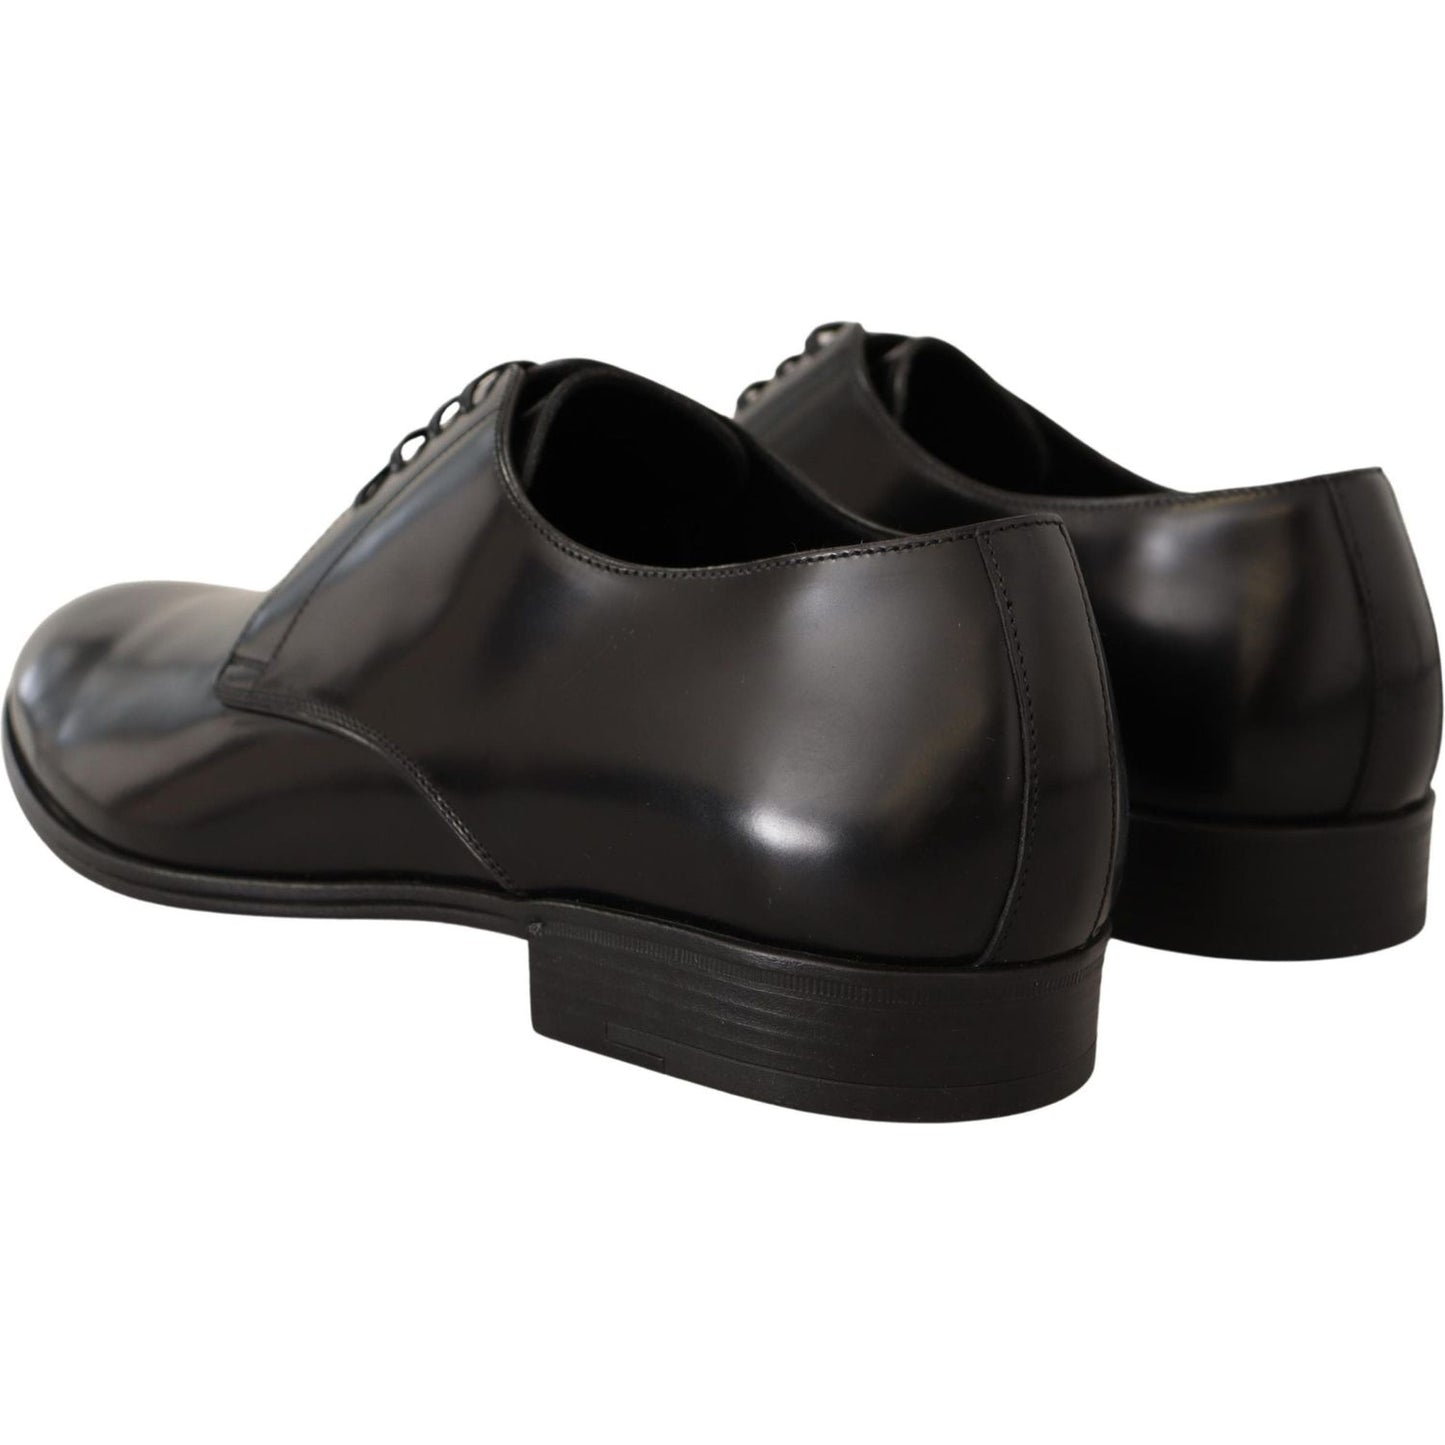 Dolce & Gabbana Elegant Black Leather Derby Shoes black-leather-lace-up-men-dress-derby-shoes-2 Dress Shoes IMG_3702-scaled-66246ae8-f5a.jpg